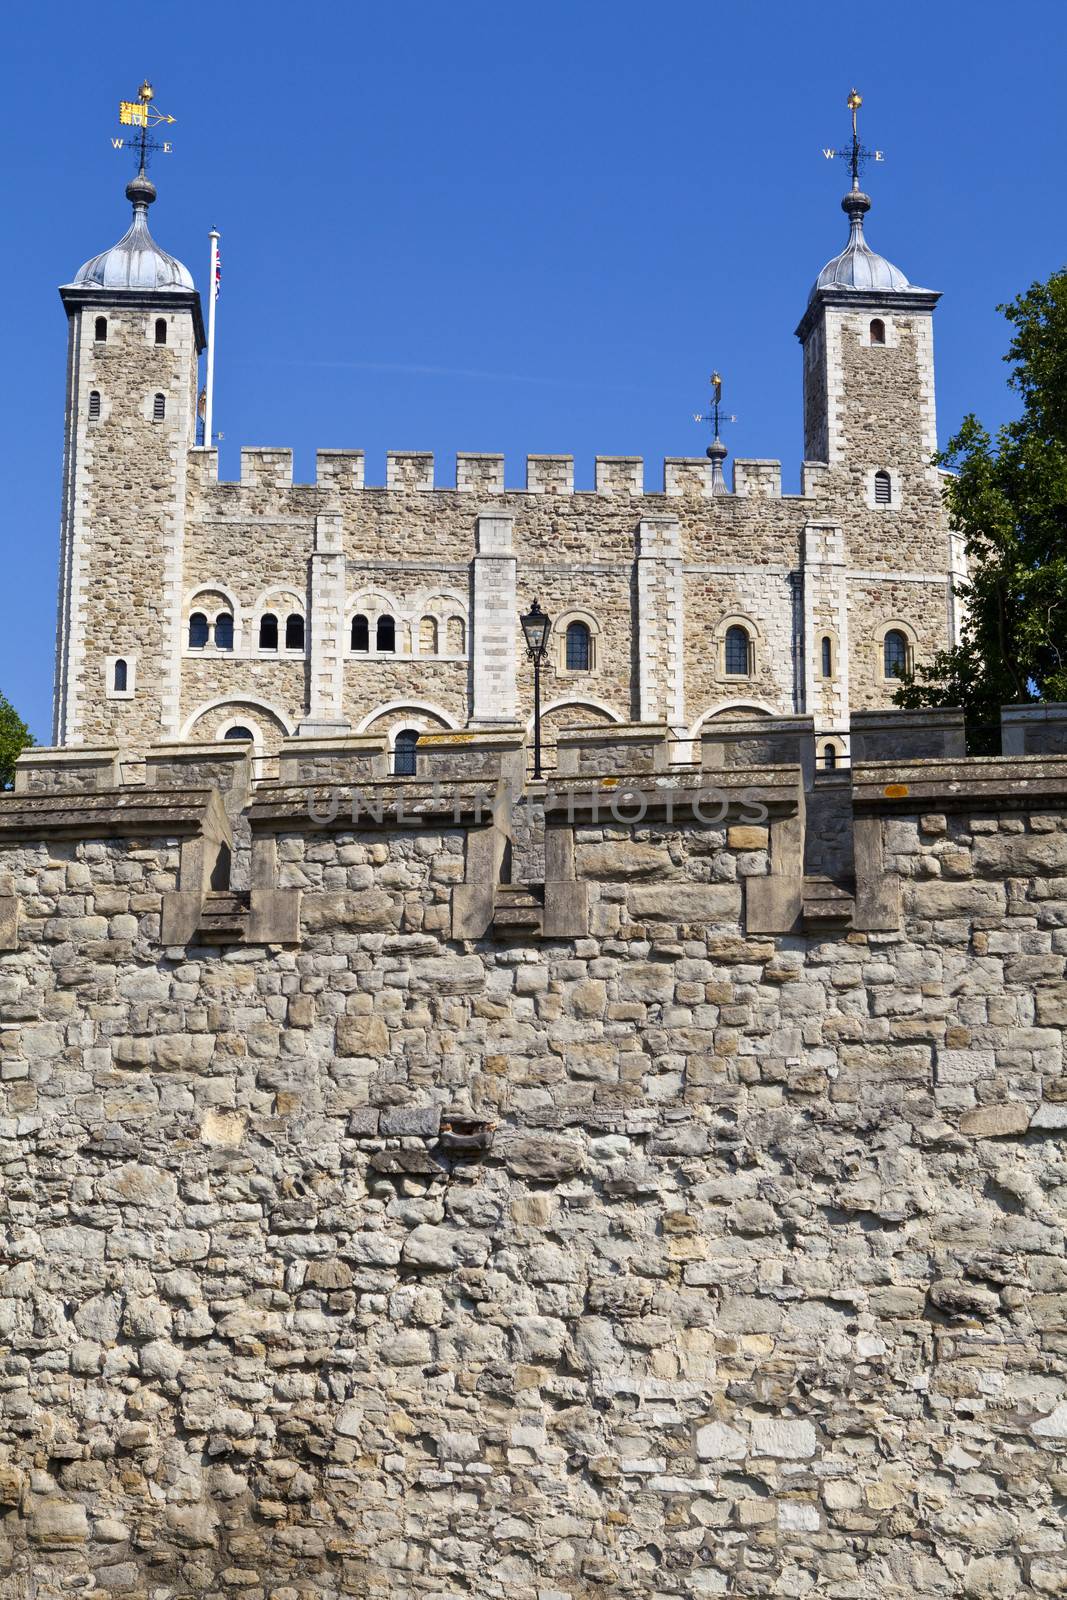 Tower of London by chrisdorney